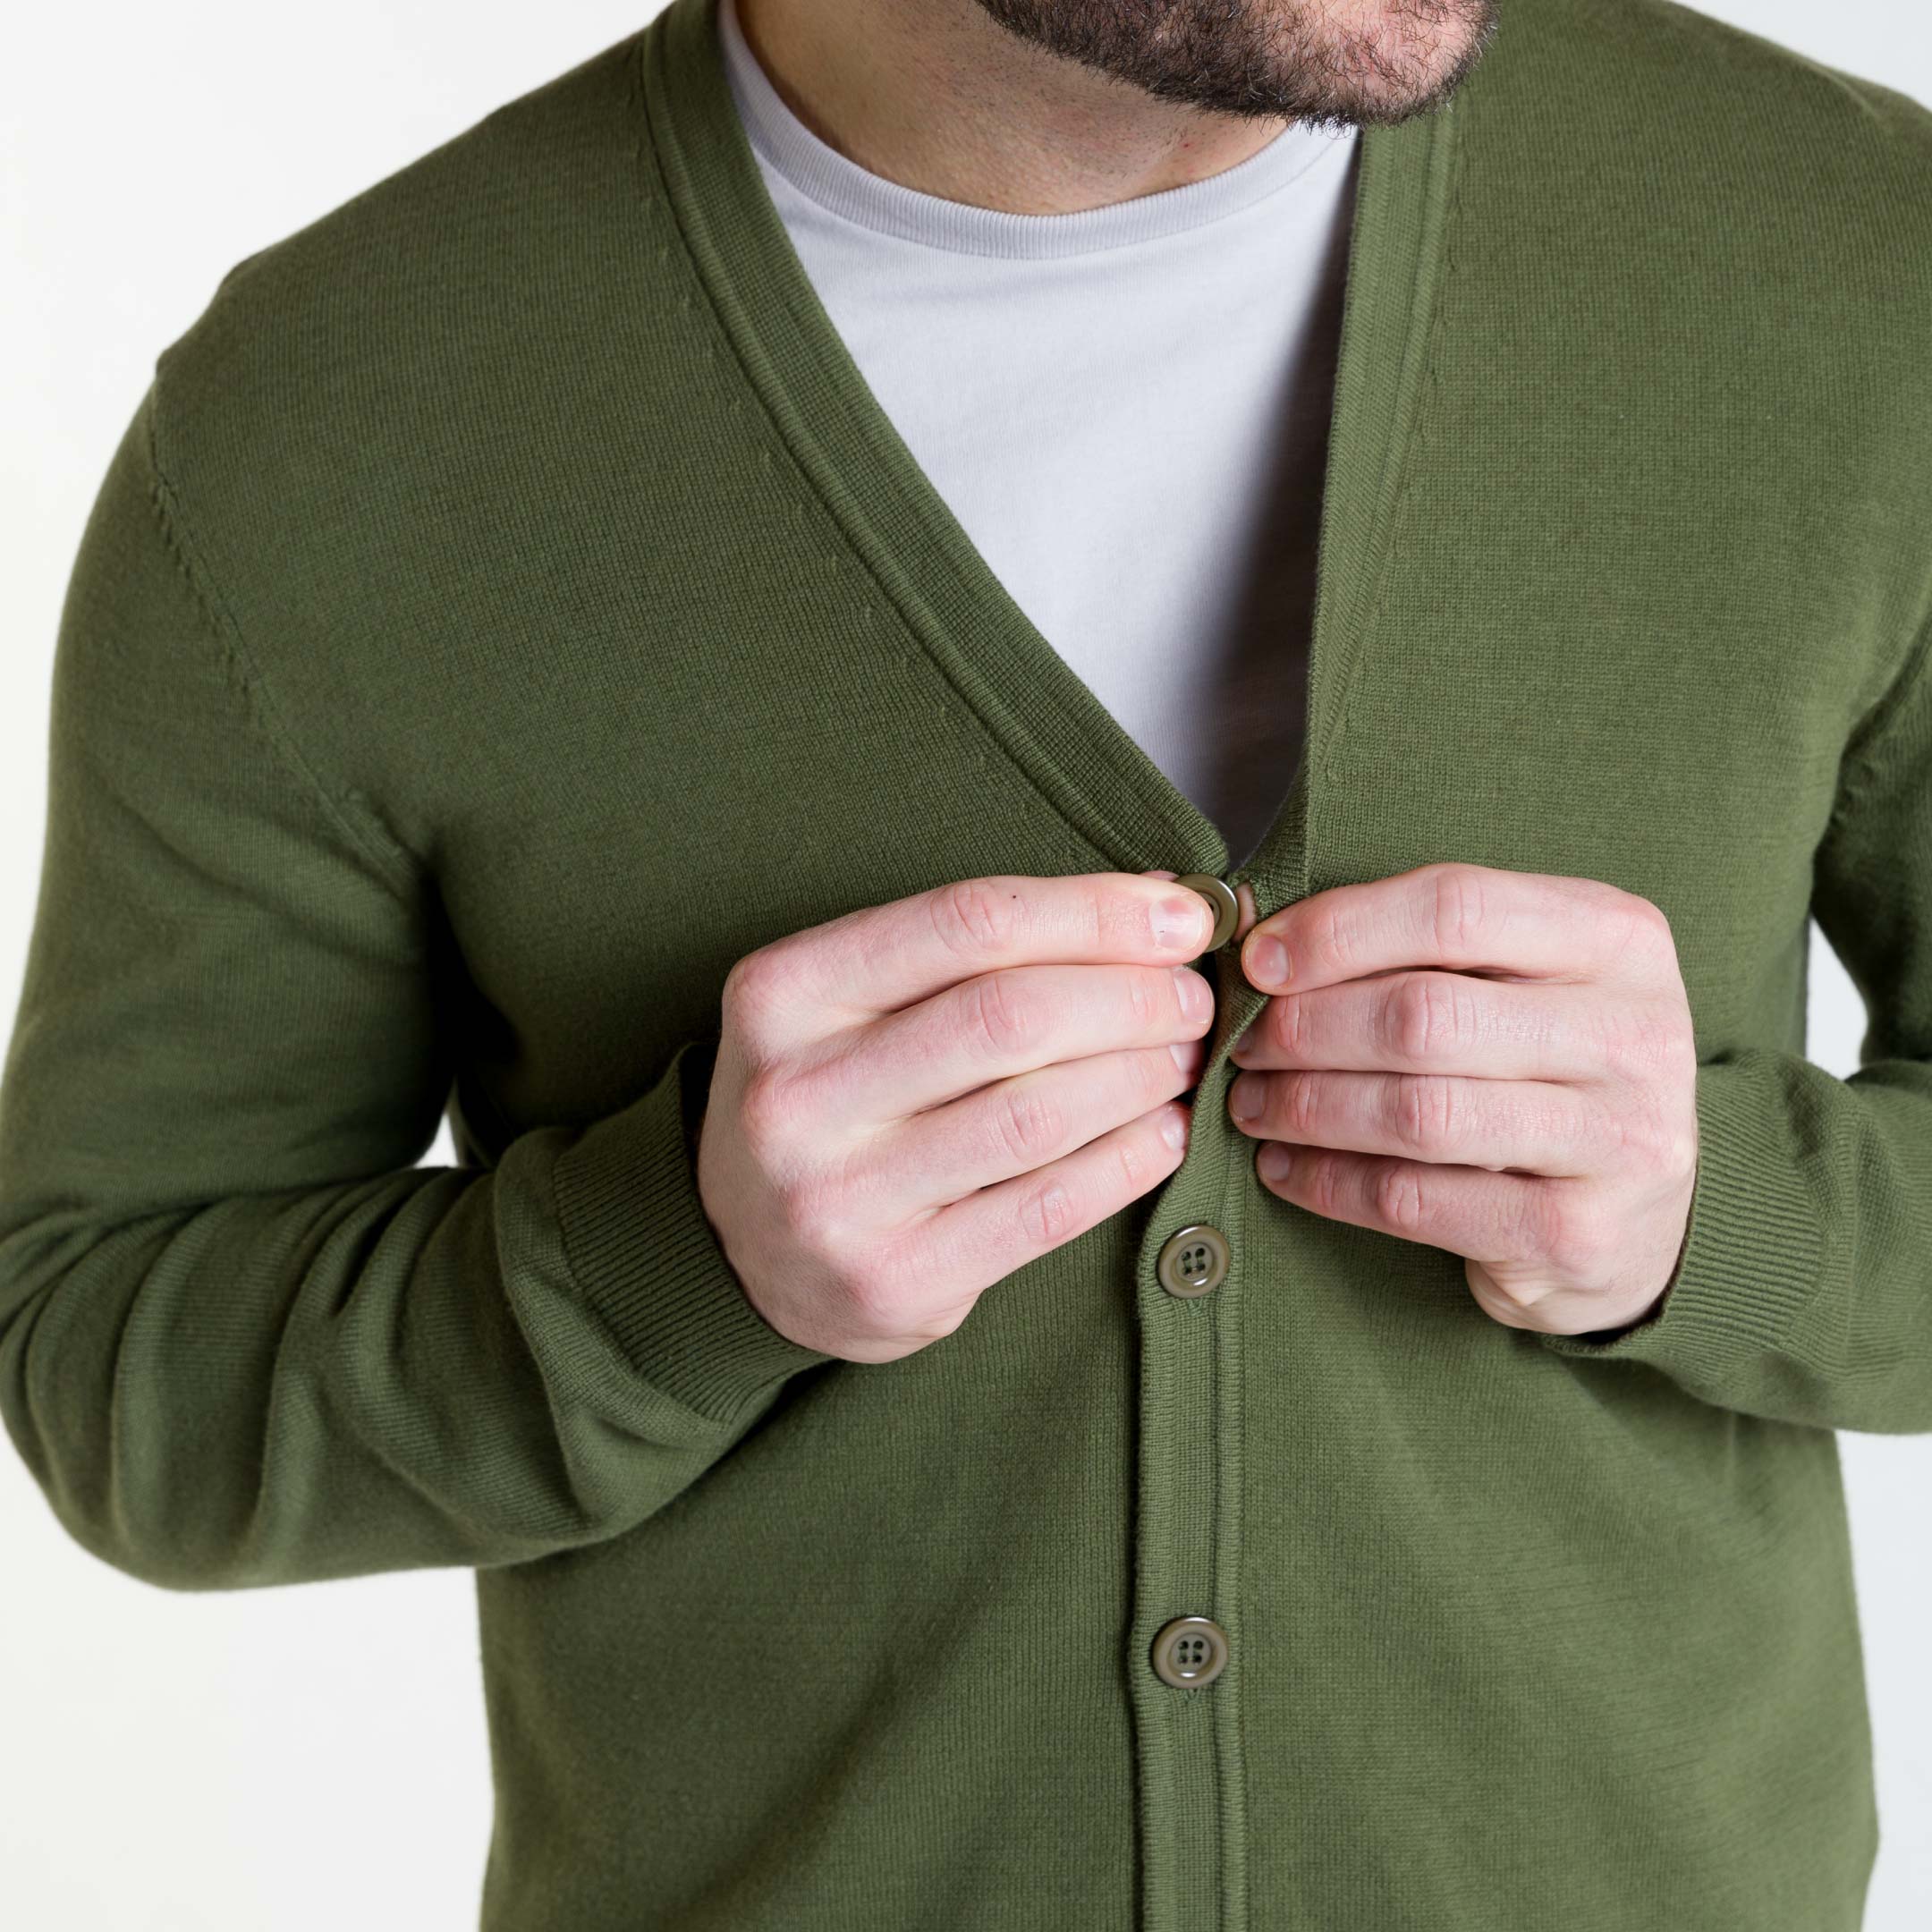 Ash & Erie Light Grey Cardigan Sweater for Short Men